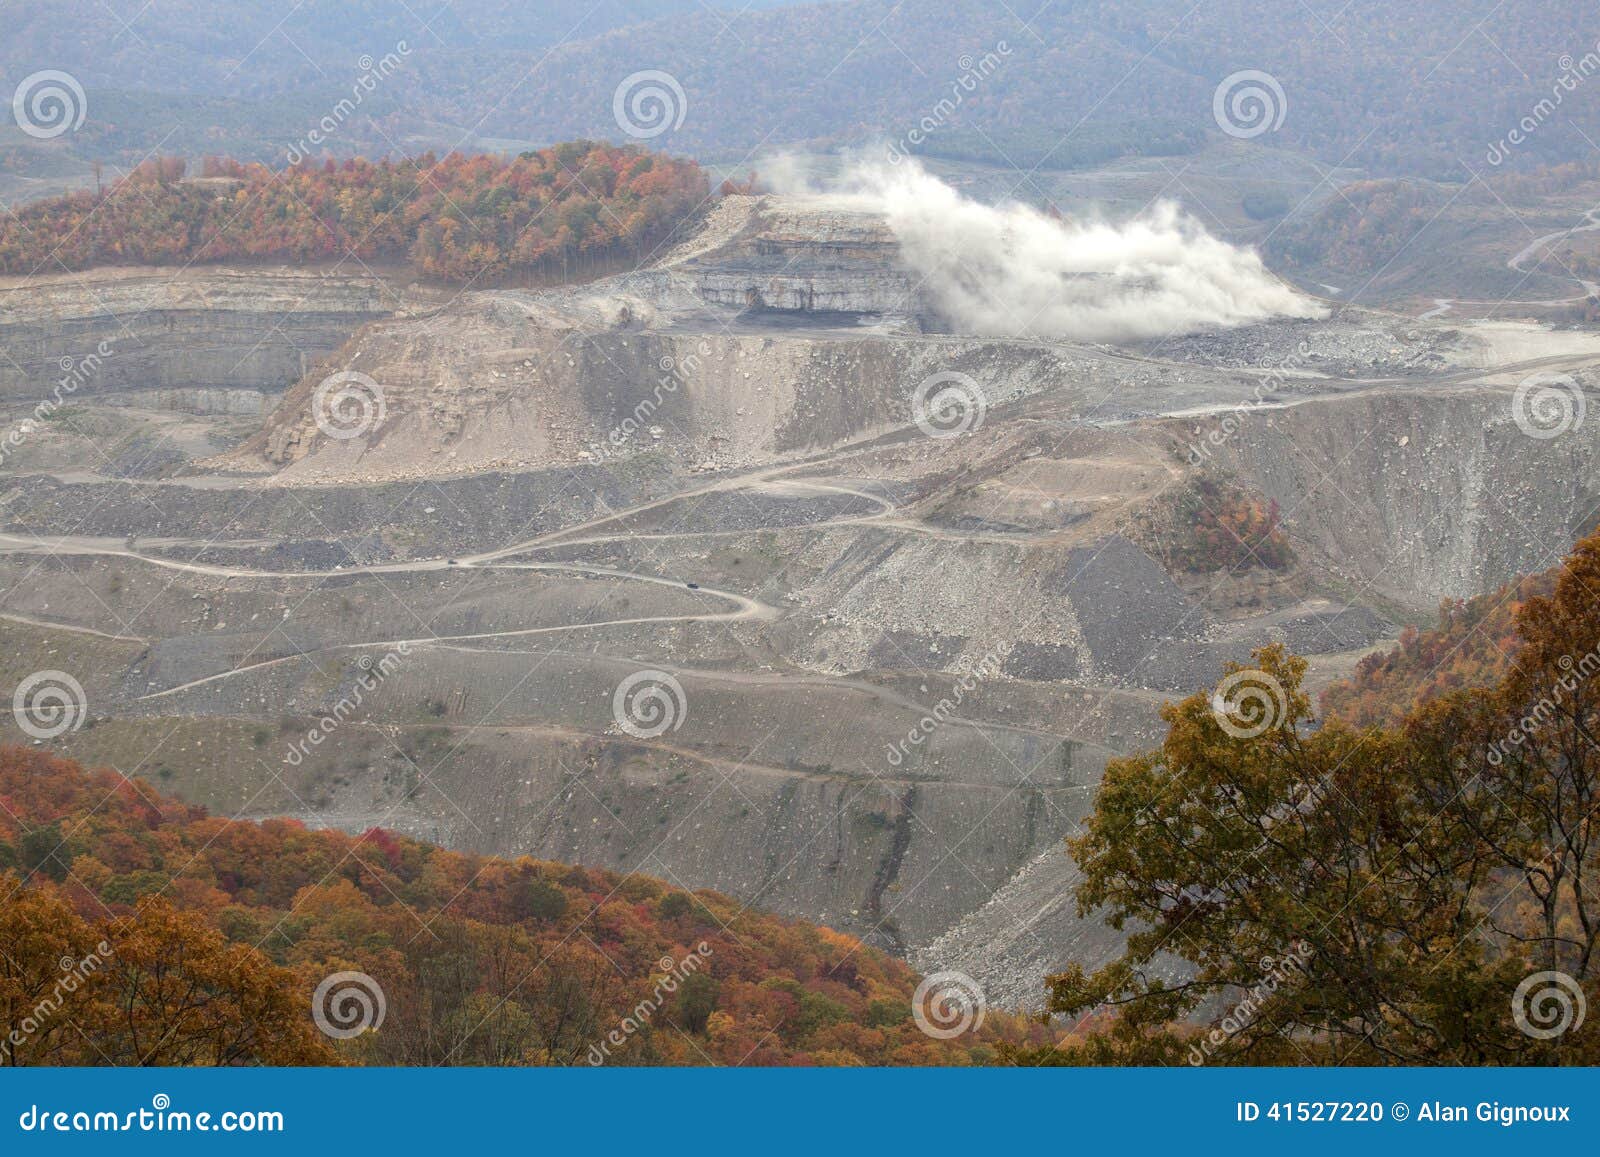 a coal mine, appalachia, america